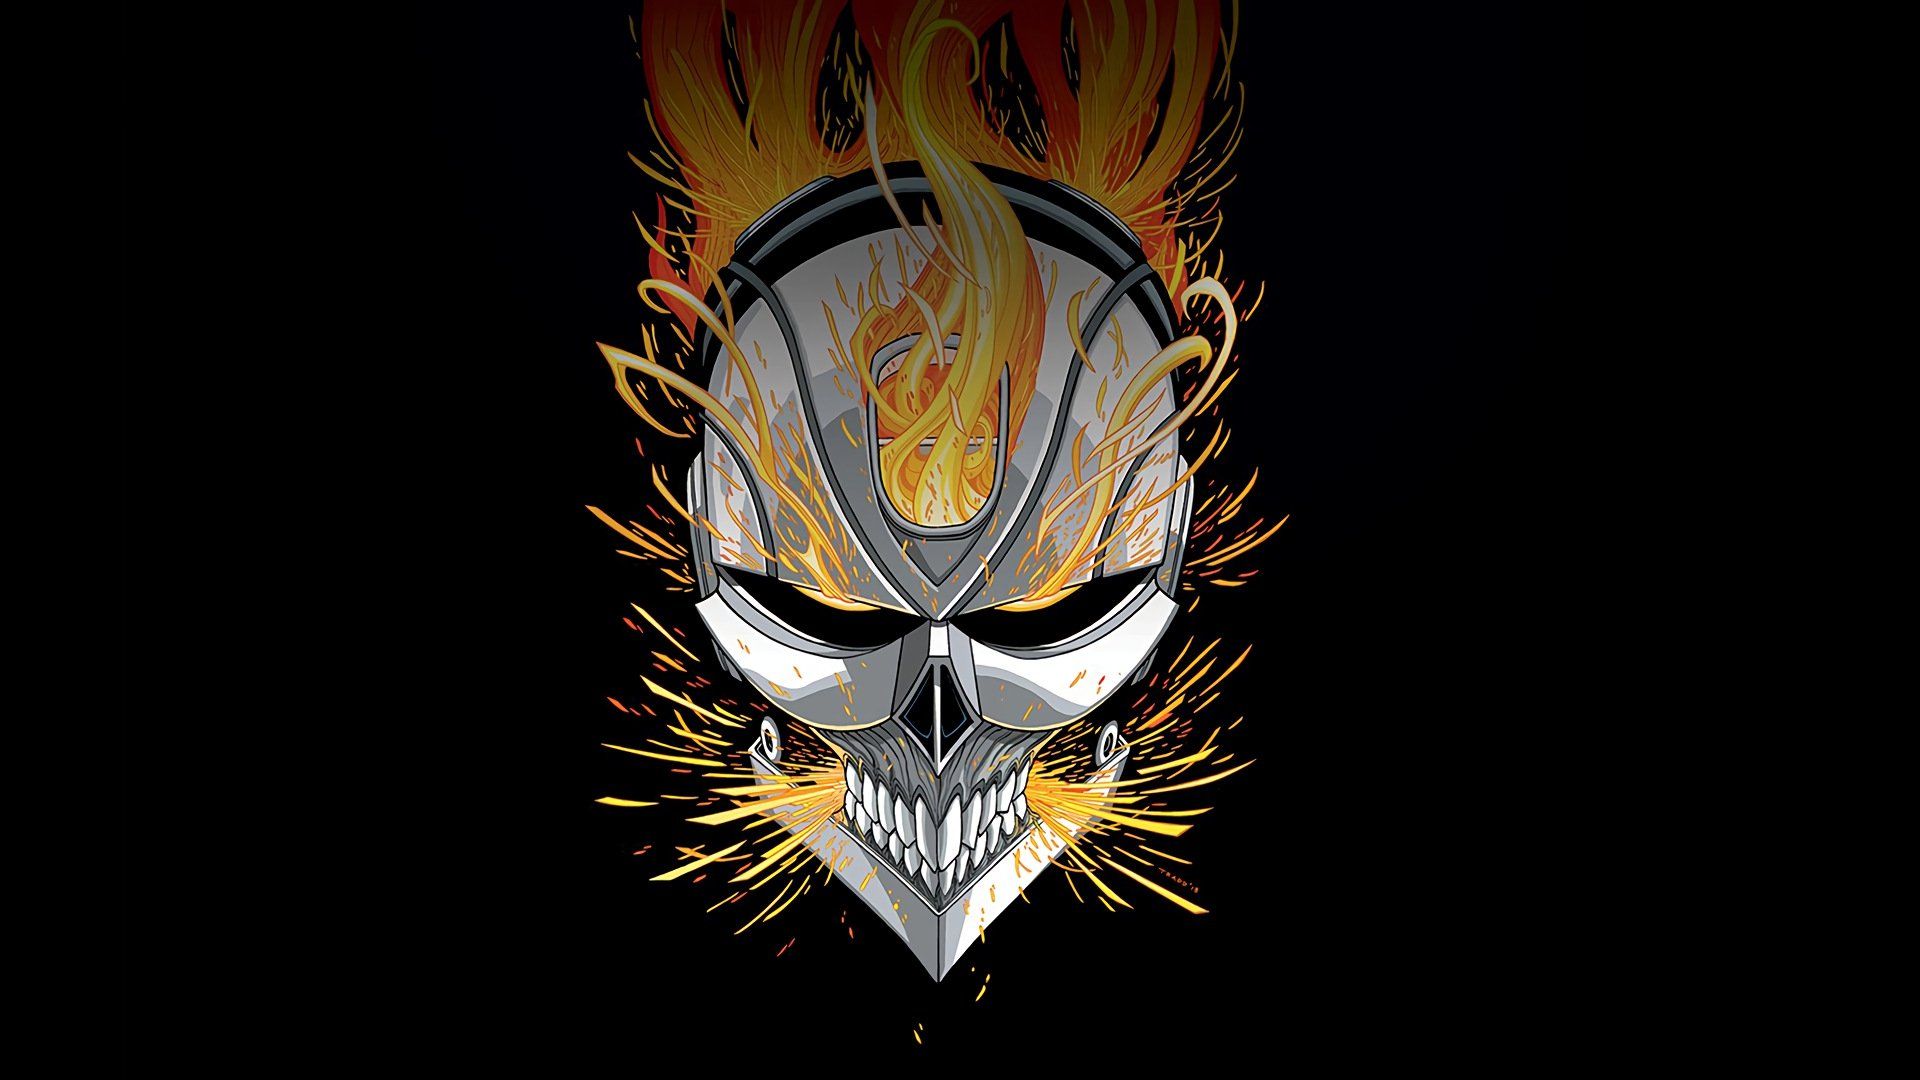 Marvel Comics, Ghost Rider, Robbie Reyes, Skull, Fire, Black background Wallpaper HD / Desktop and Mobile Background